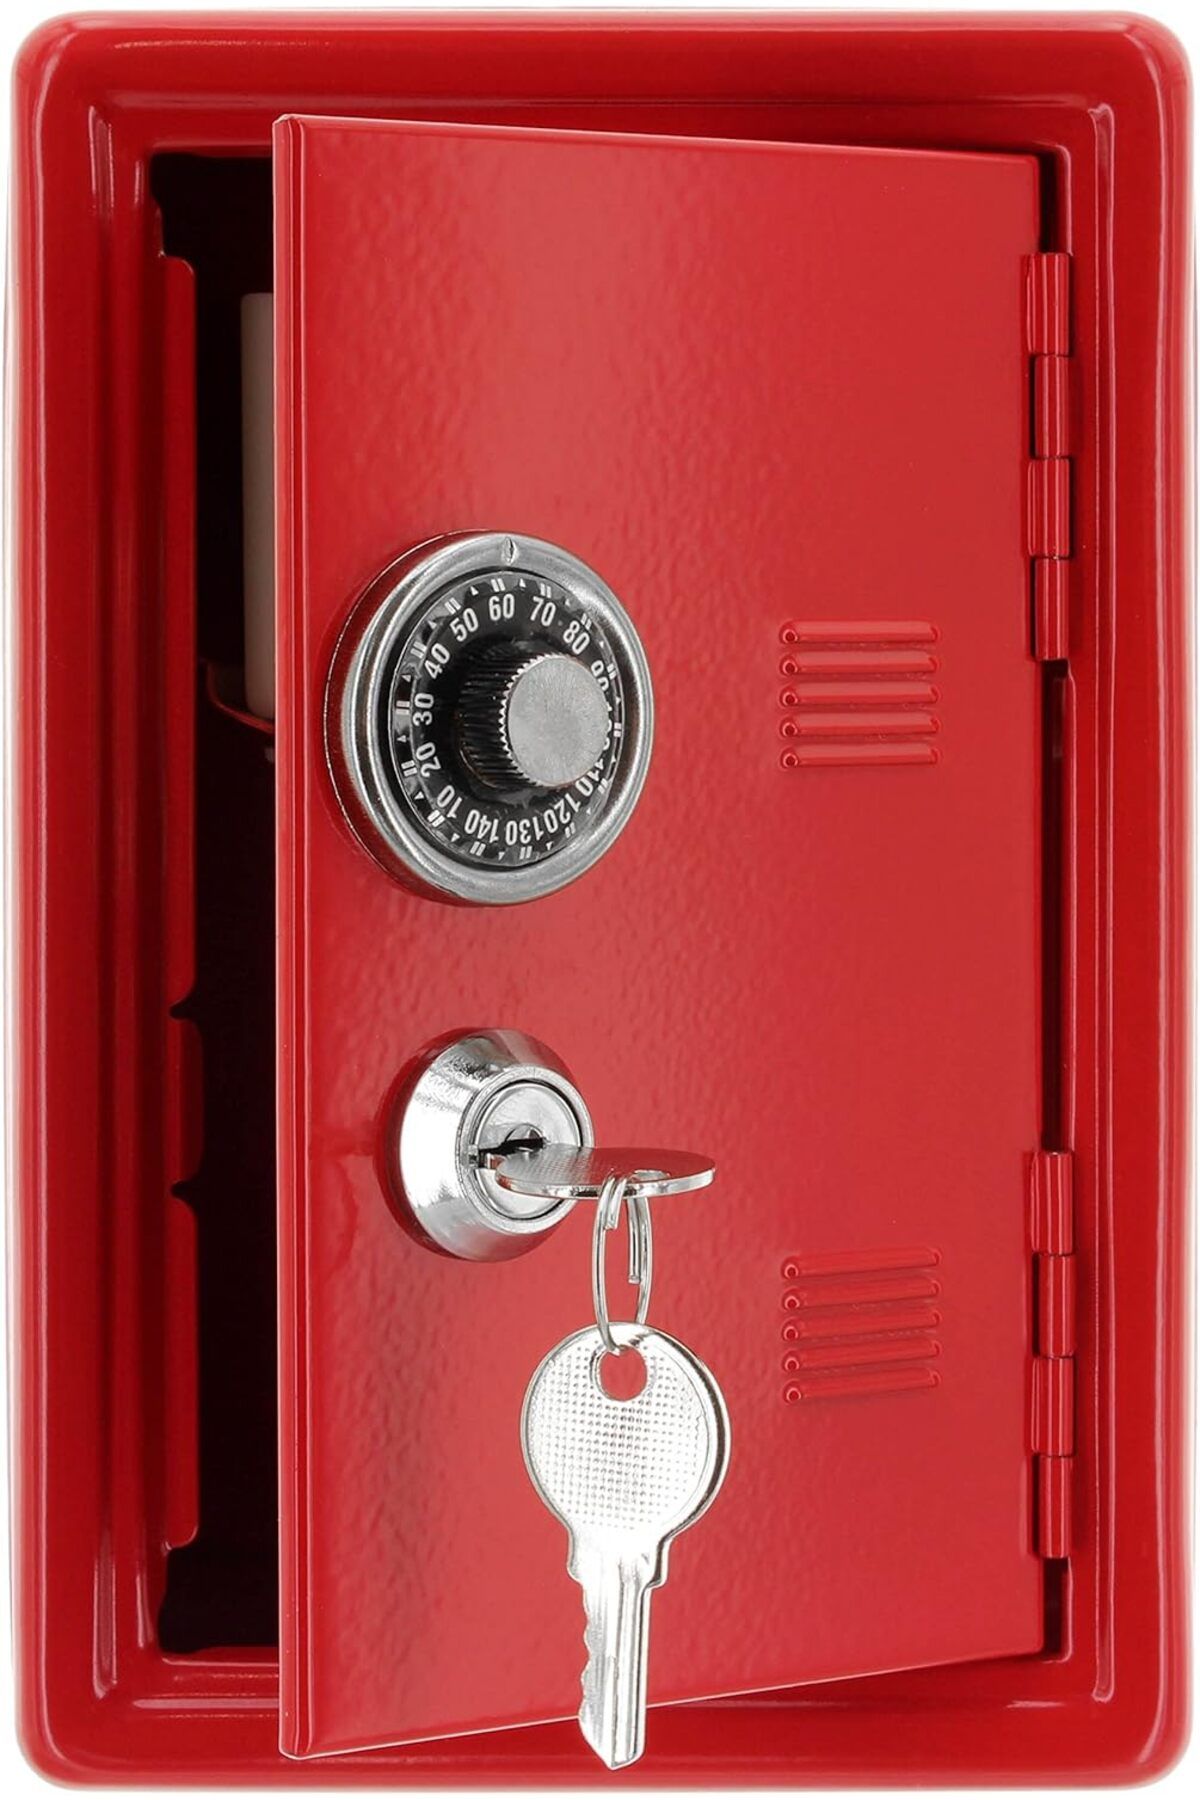 Genel Markalar YERLİ ÜRETİM Büyük Boy Kilitli Kasa Kumbara Anahtarlı Mini Metal Para Kasası 18x12x10cm Kırmızı